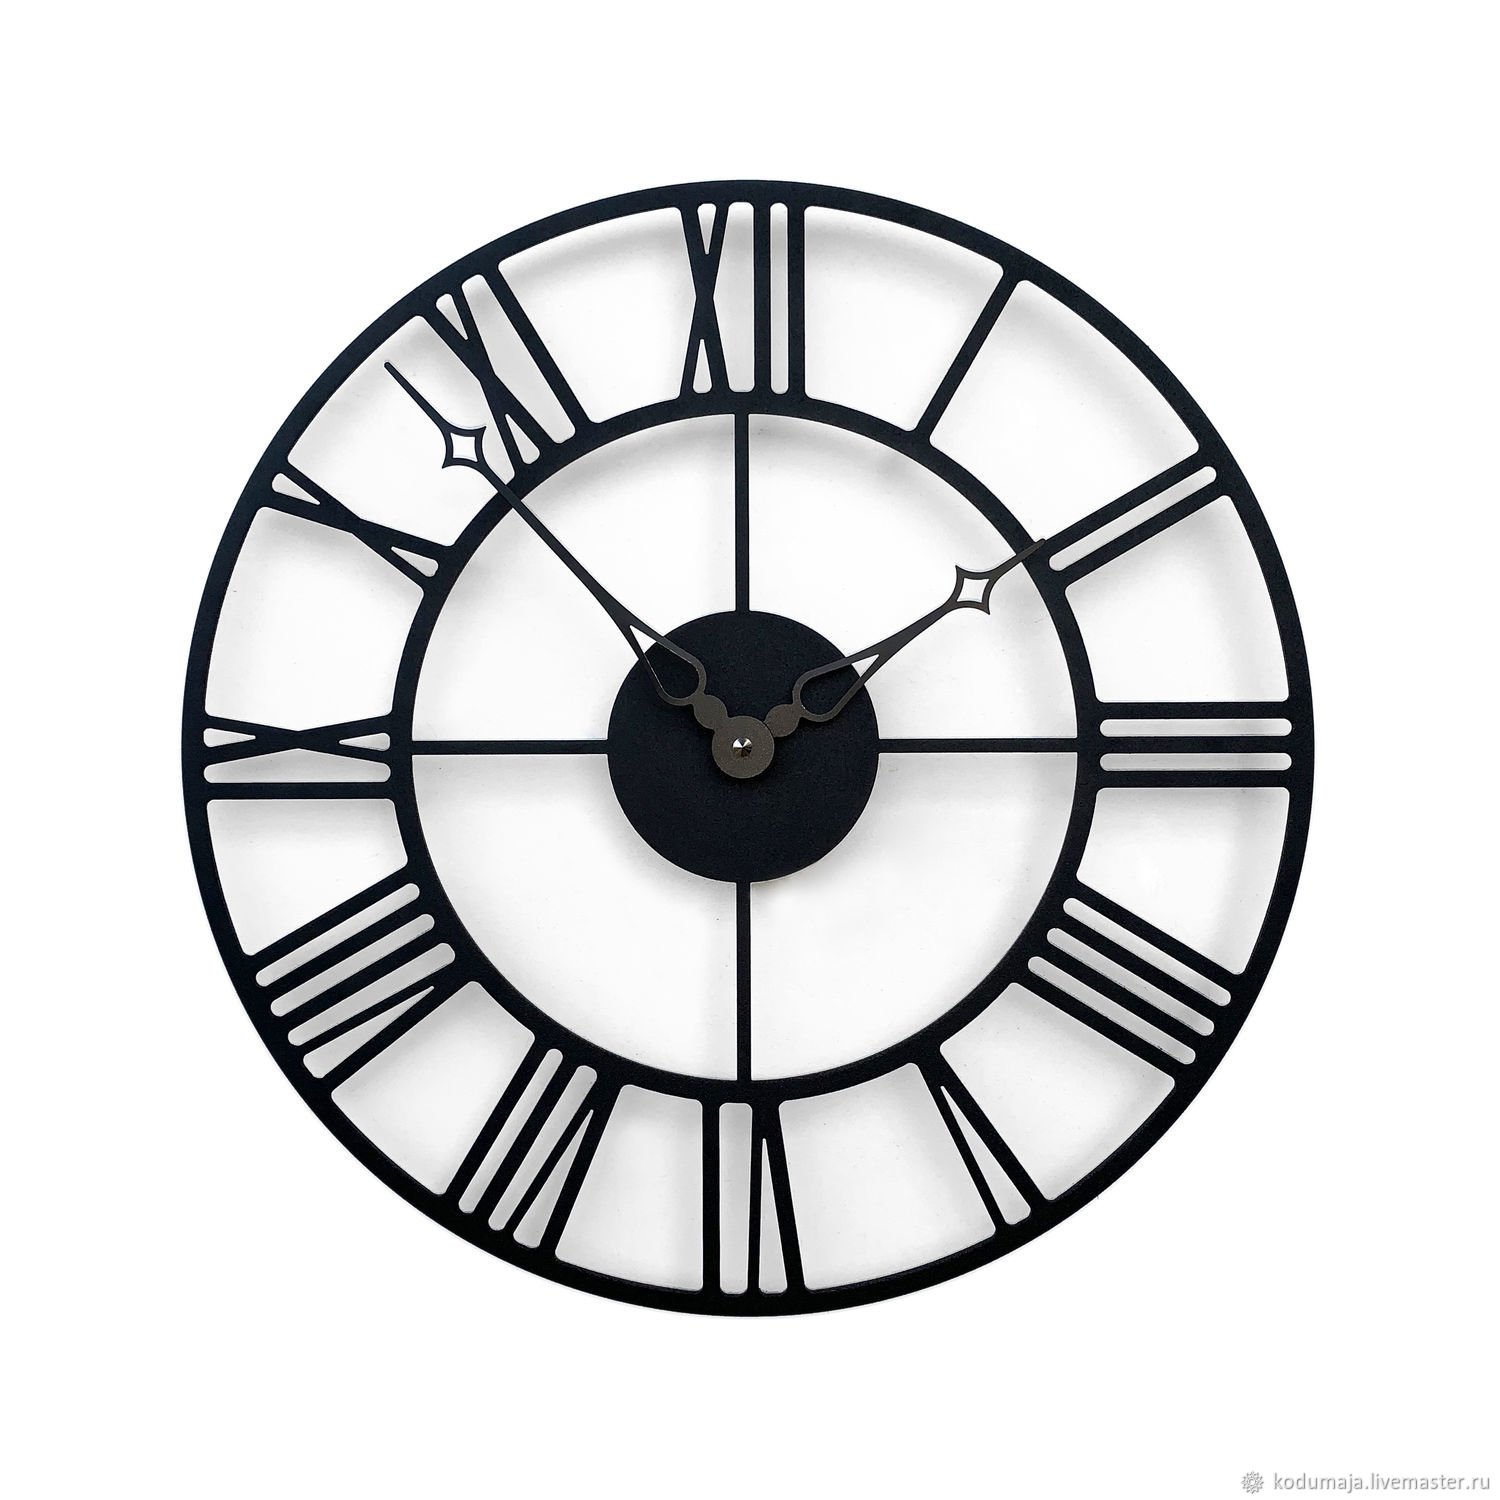 Часы настенные 50 см. Часы kodukuus. Hz1003320 часы настенные металлические черные d70см. Часы лофт металл римские 40см. Часы настенные из металла.